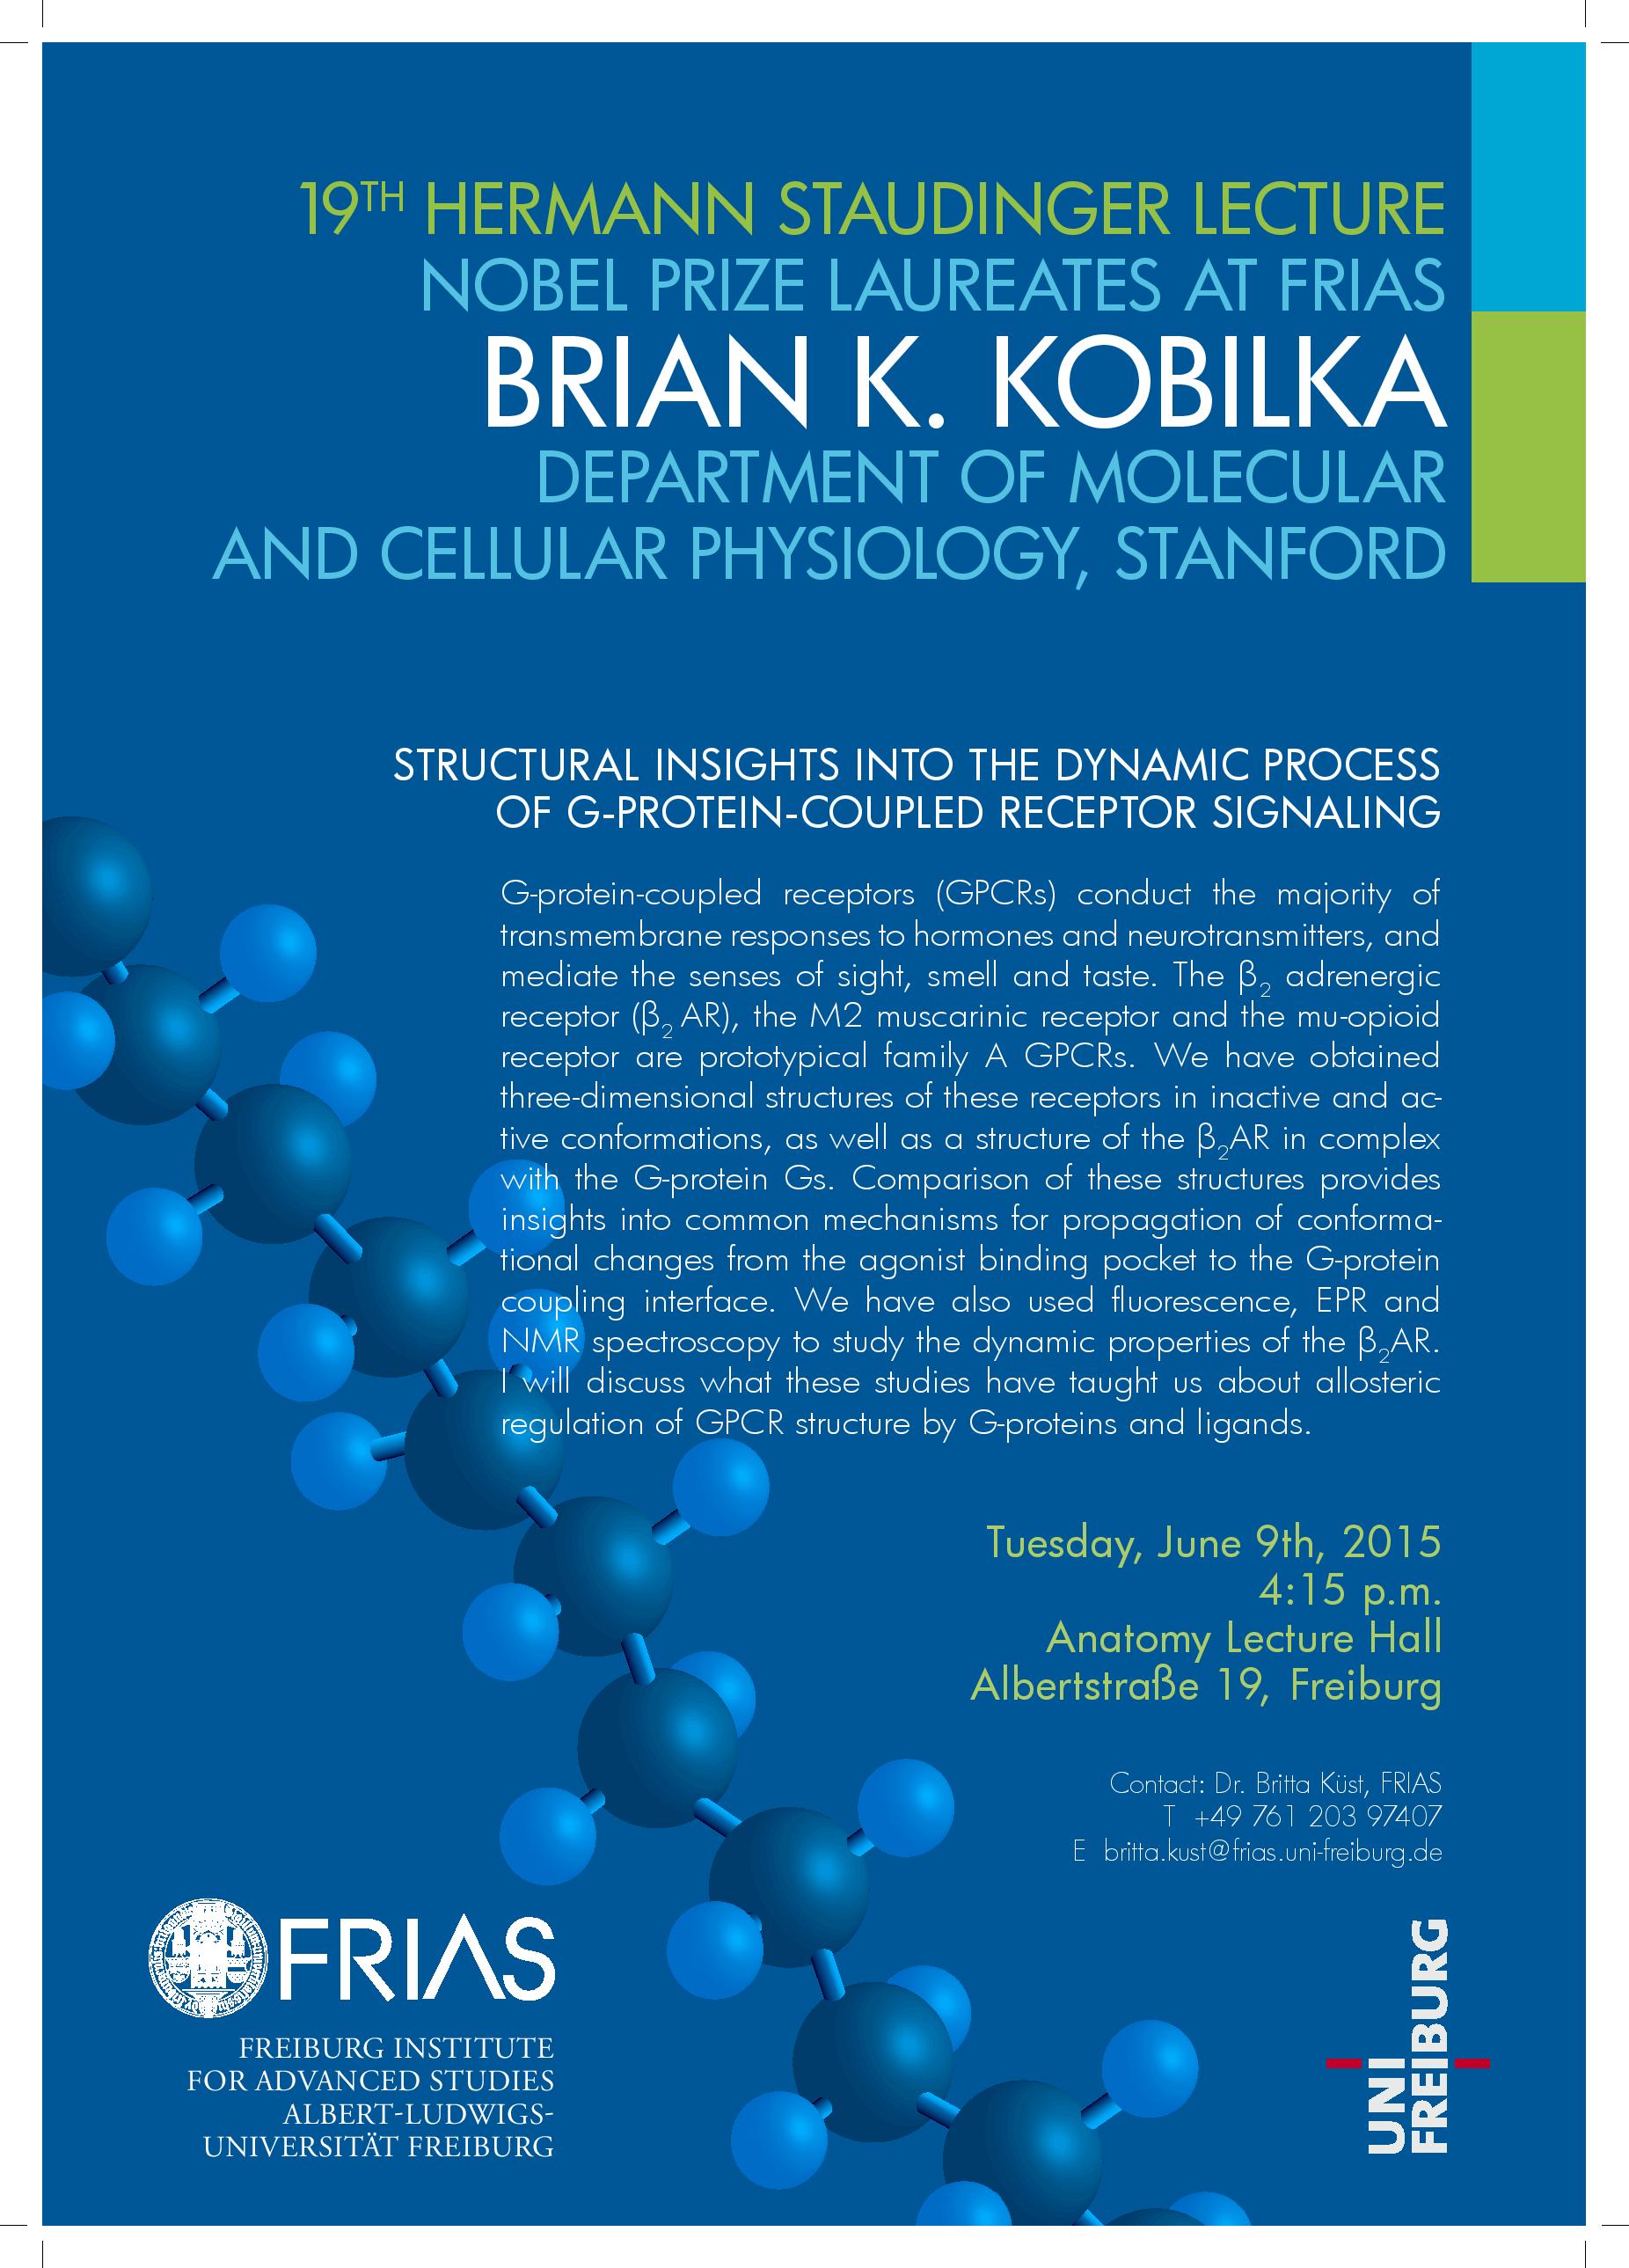 19. Hermann Staudinger Lecture mit Nobelpreisträger Brian K. Kobilka am 9. Juni 2015